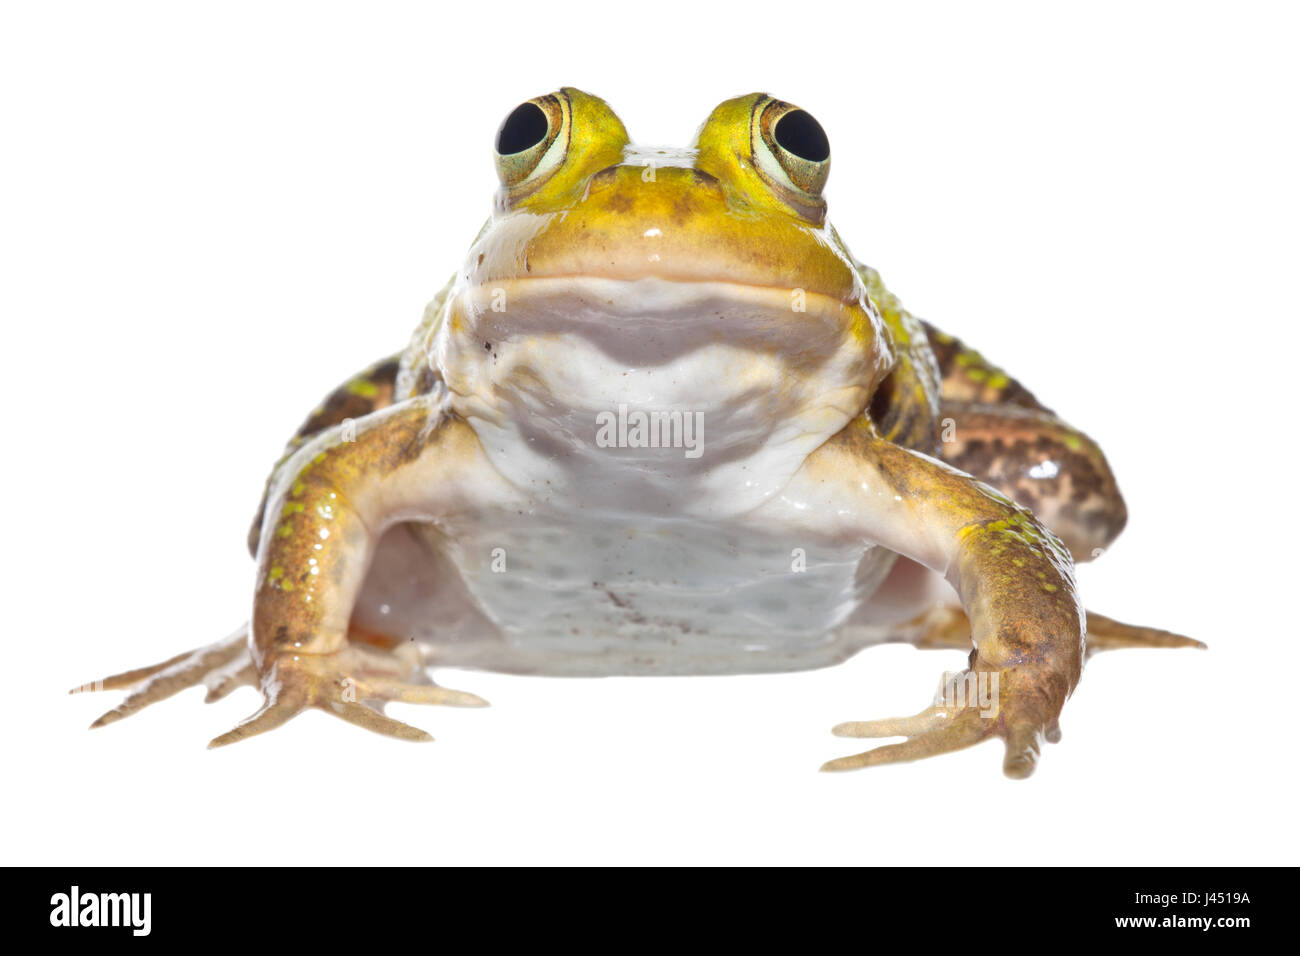 Pool frog isolated on white background Stock Photo